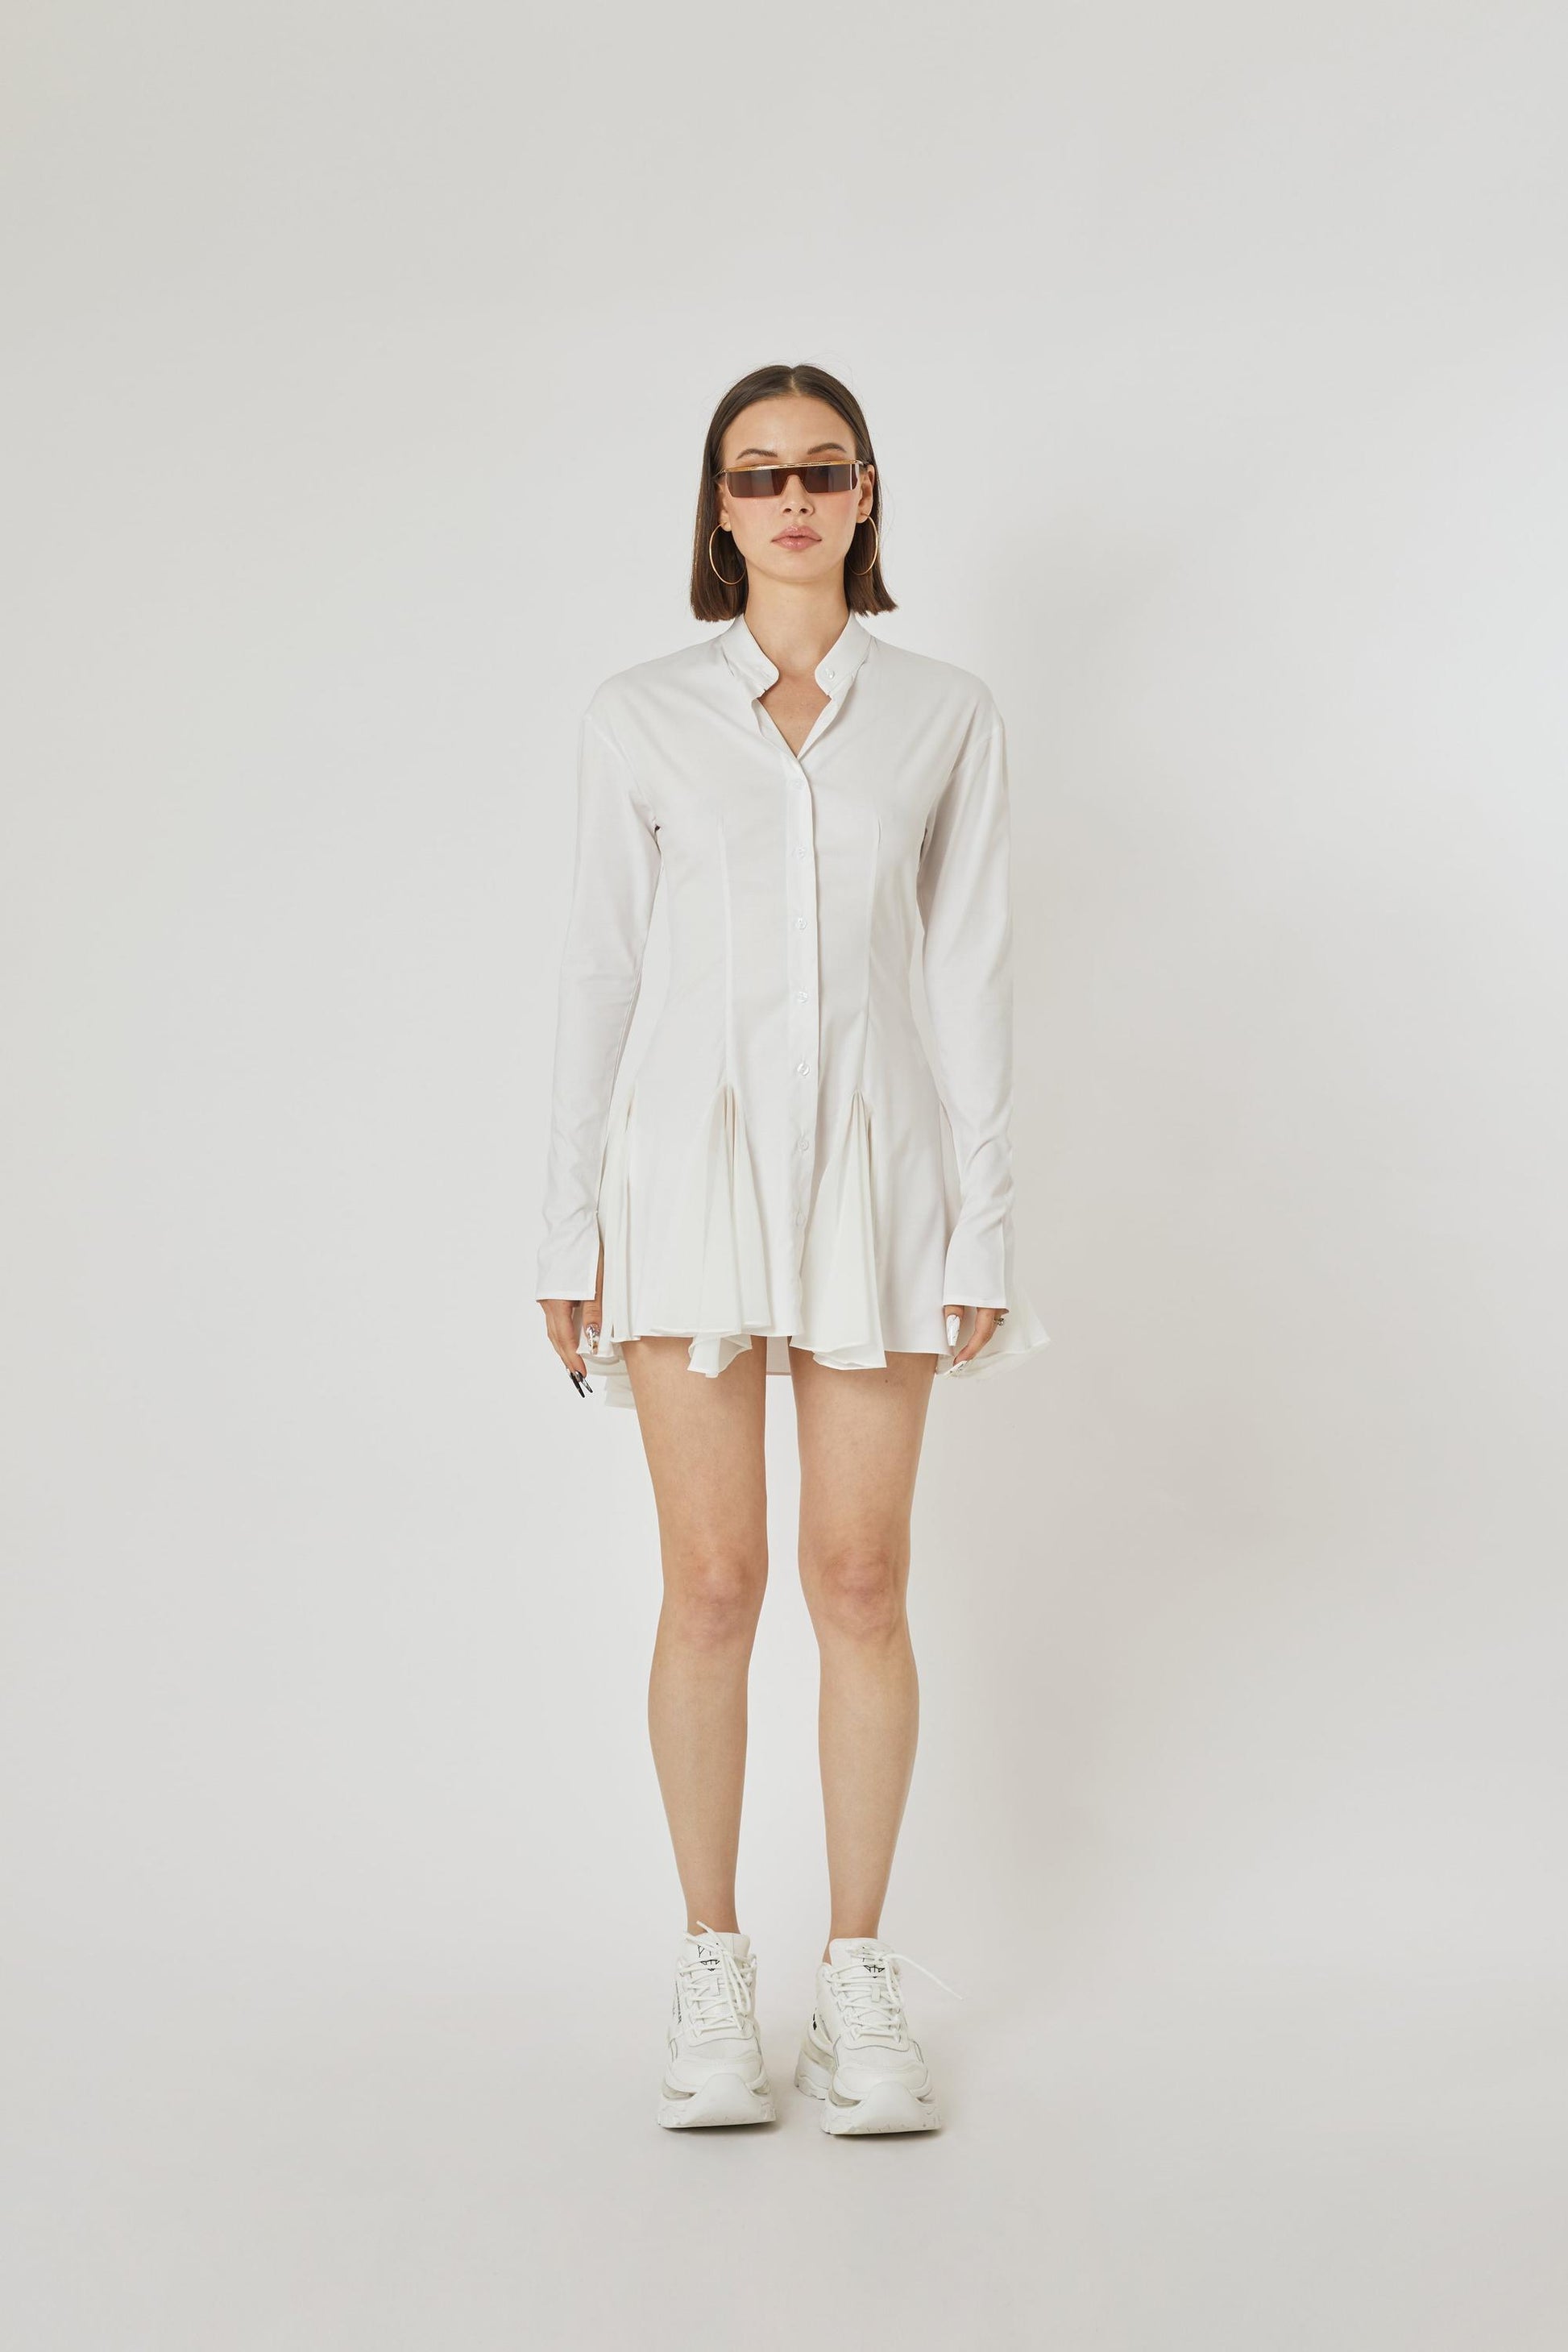 Mr. Mandarin Shirt Dress (Satin) Onarin - Stolen Stores S / White